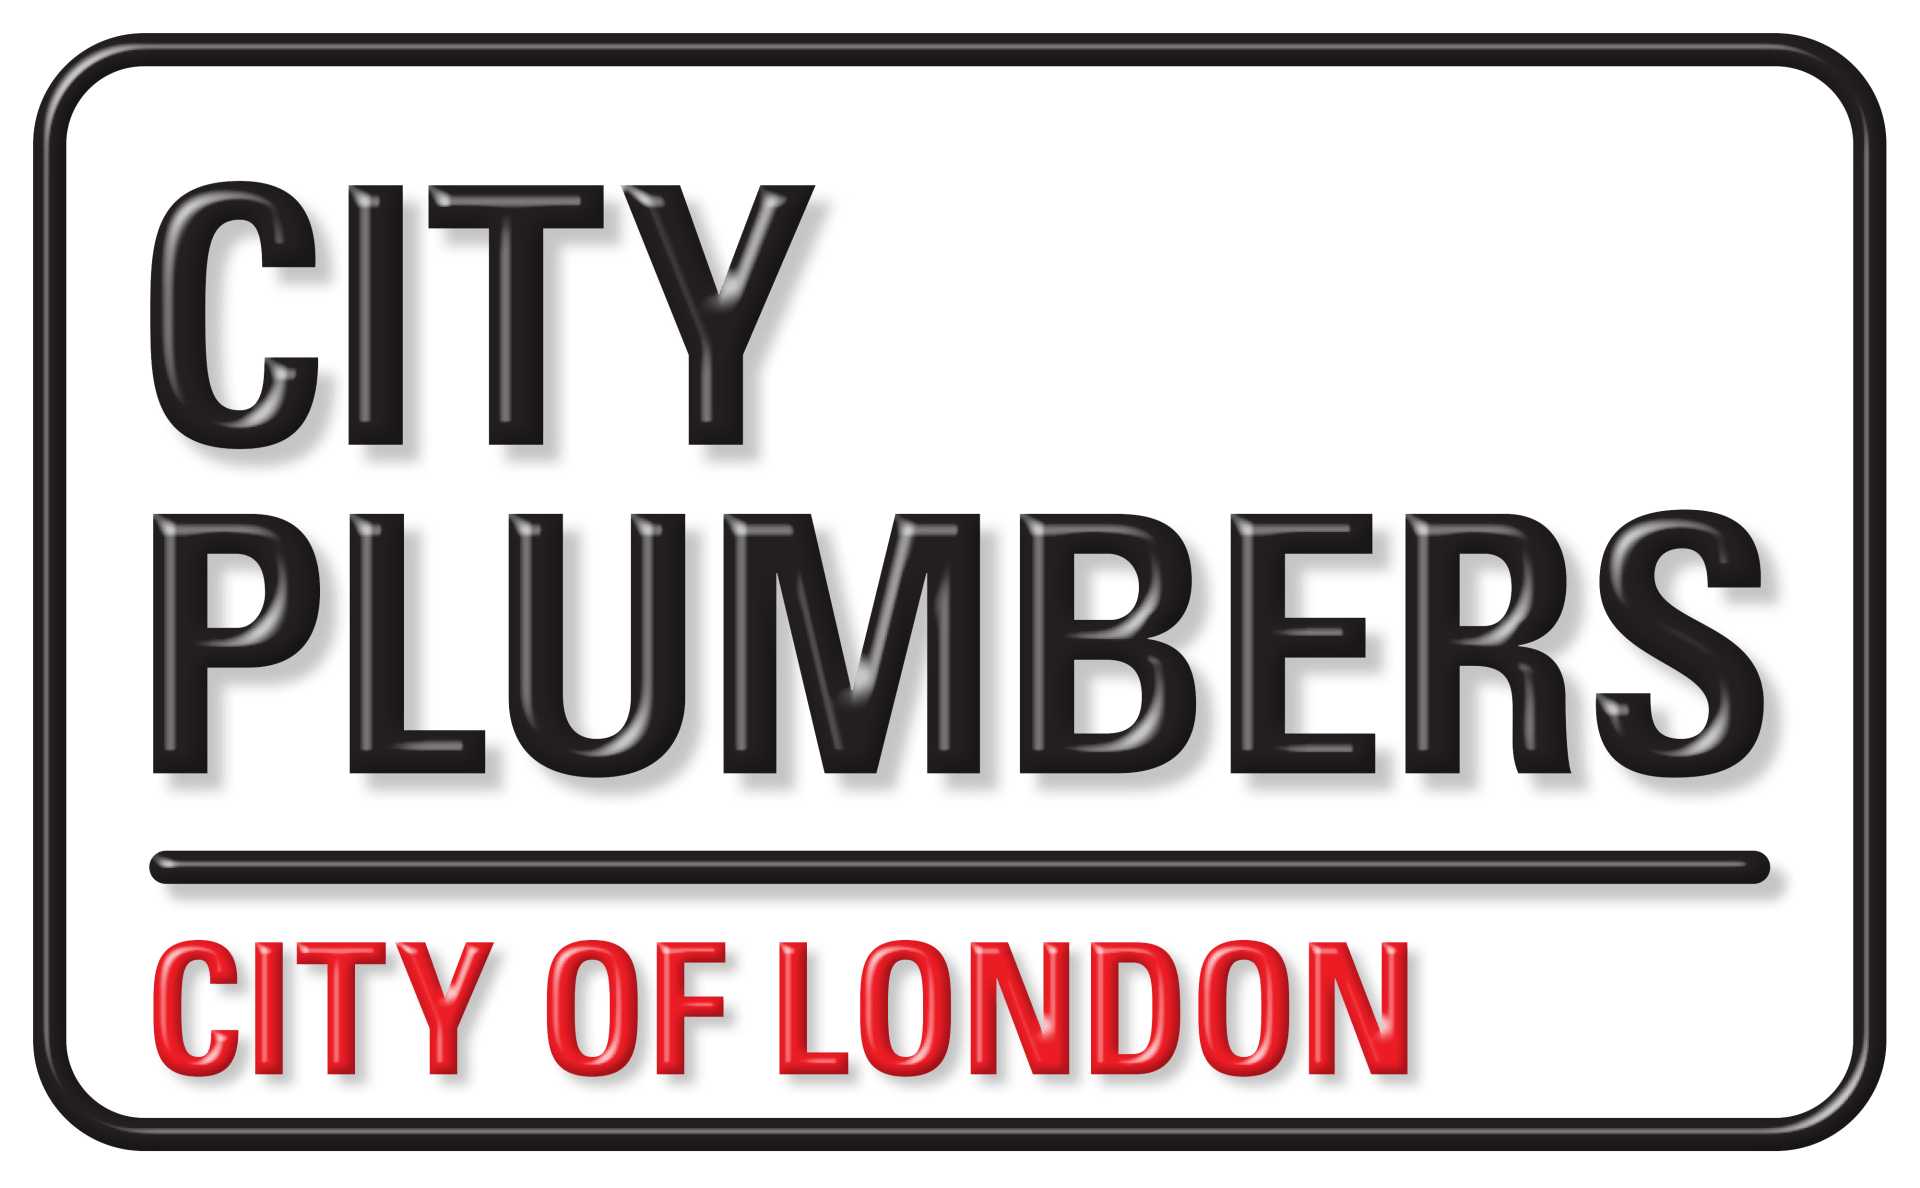 City Plumbers logo